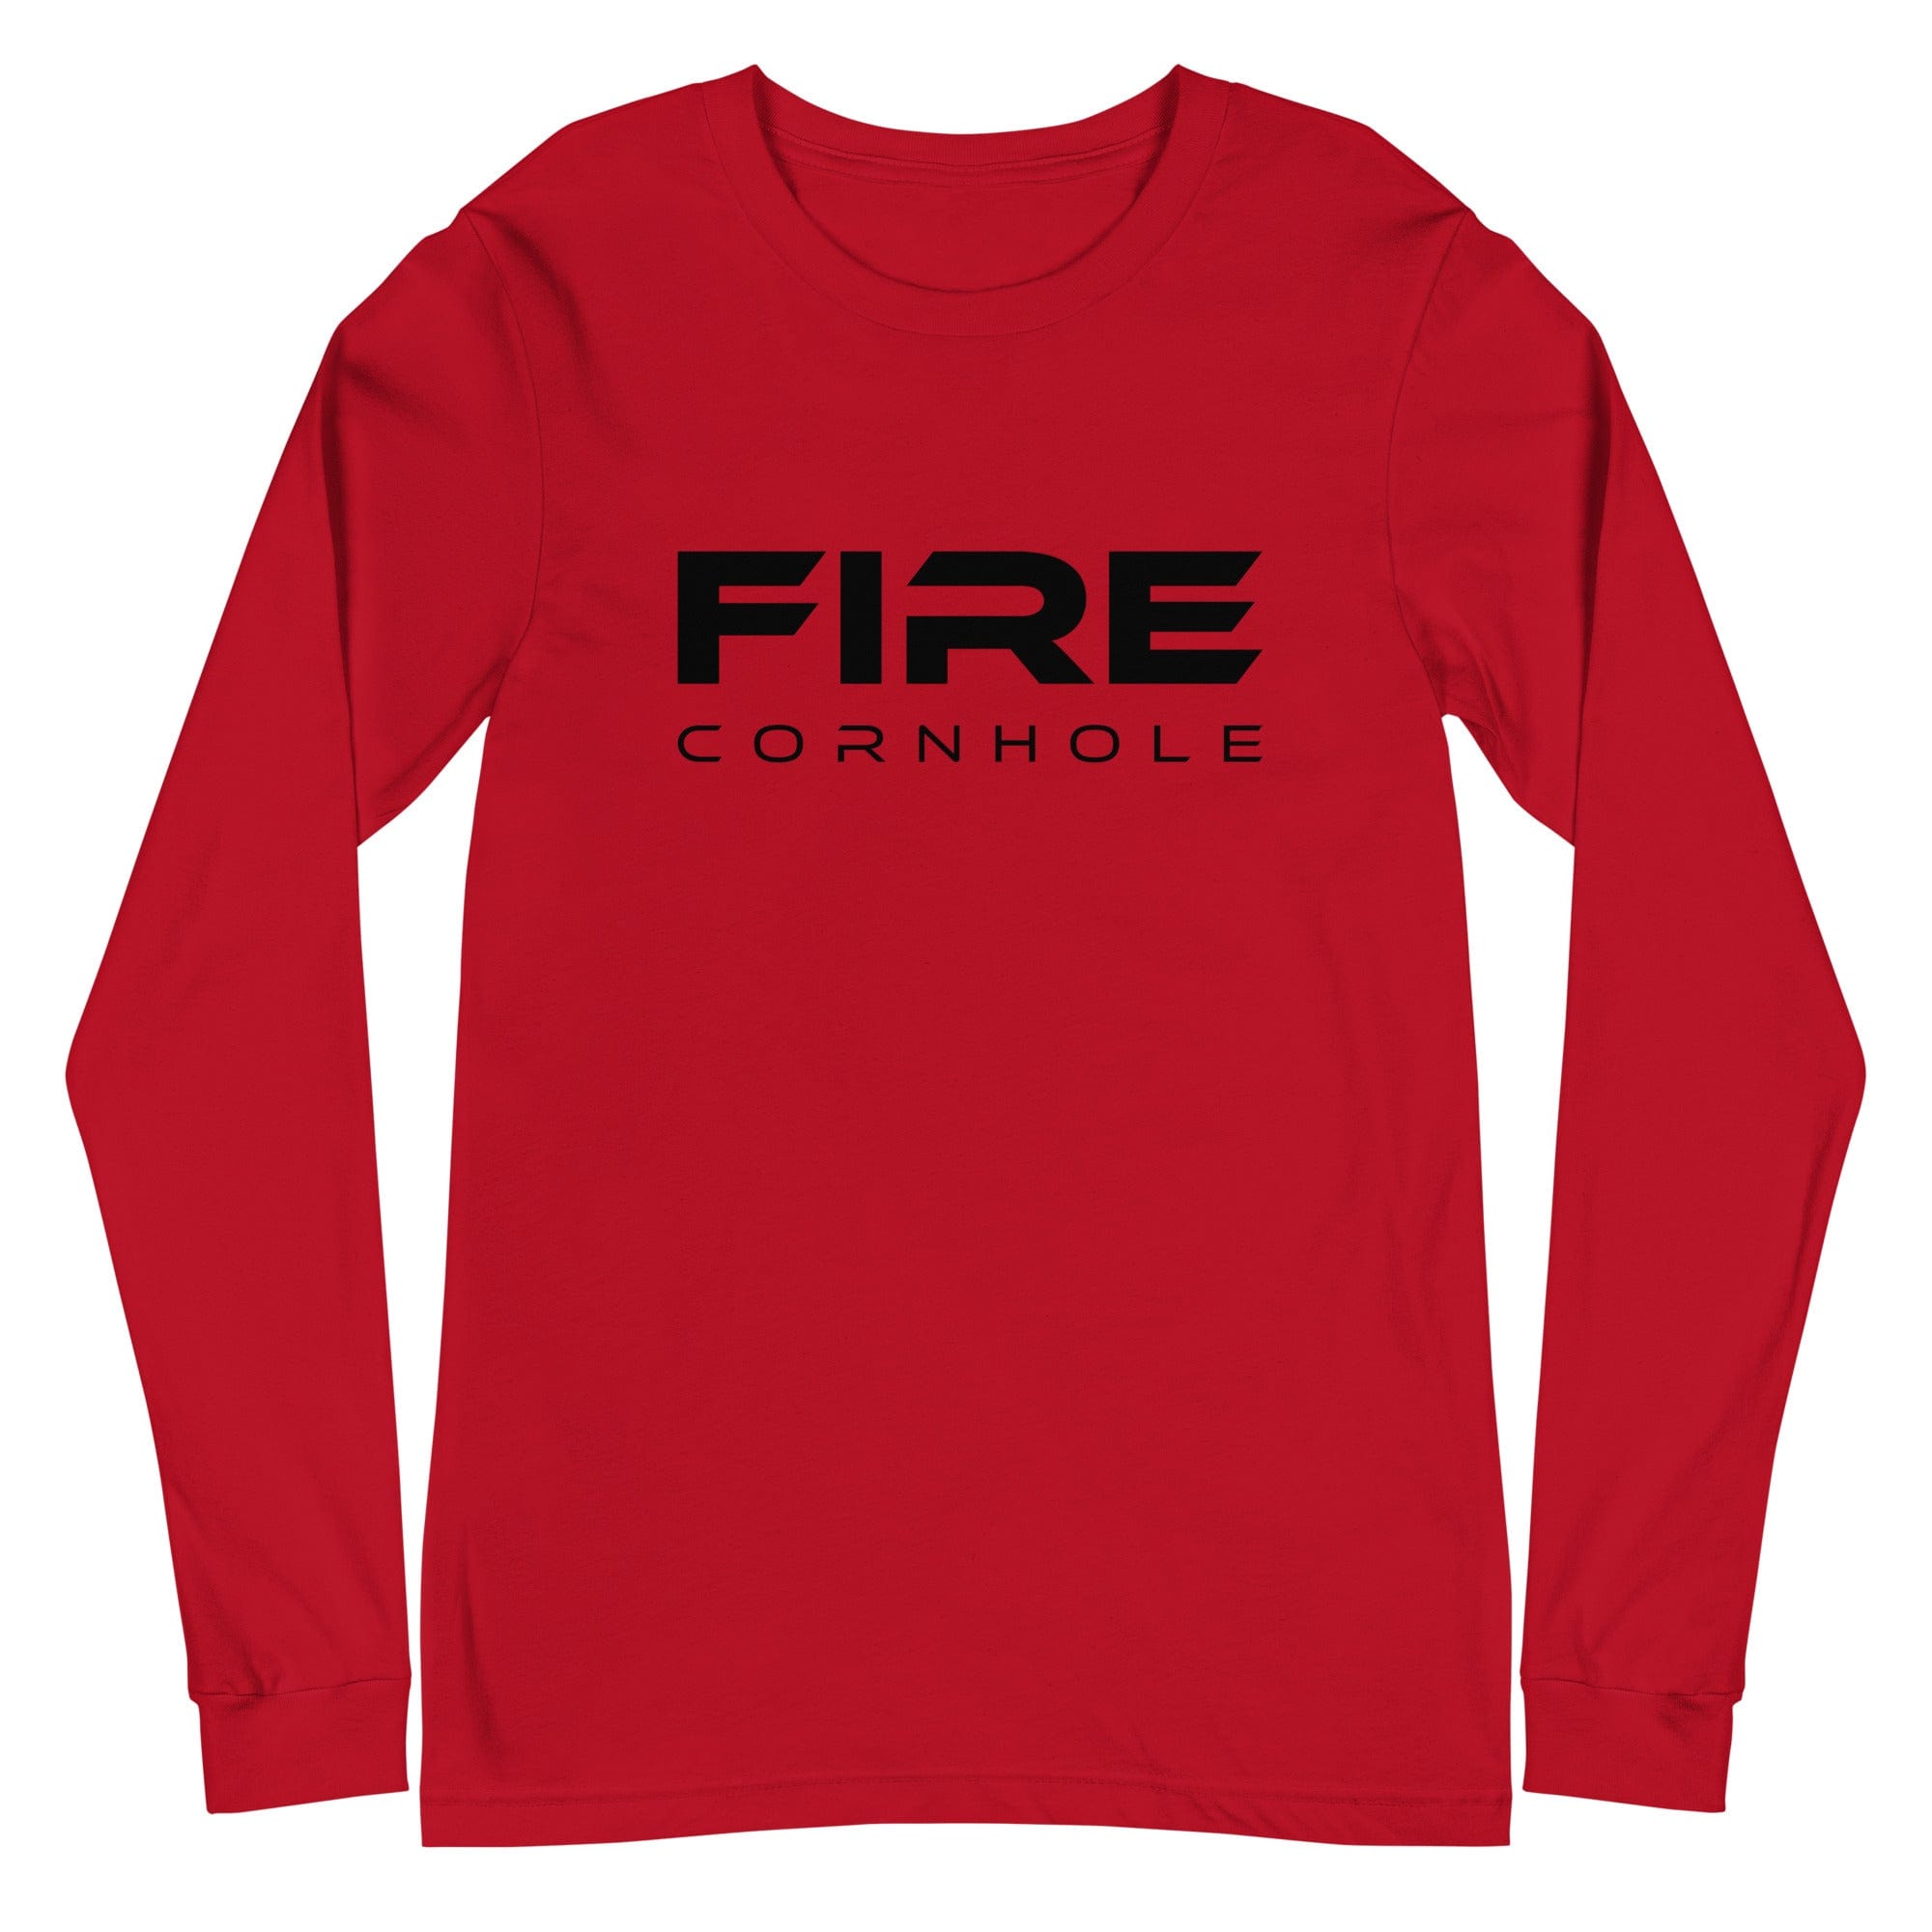 Red unisex cotton longsleeve shirt with Fire Cornhole logo in black